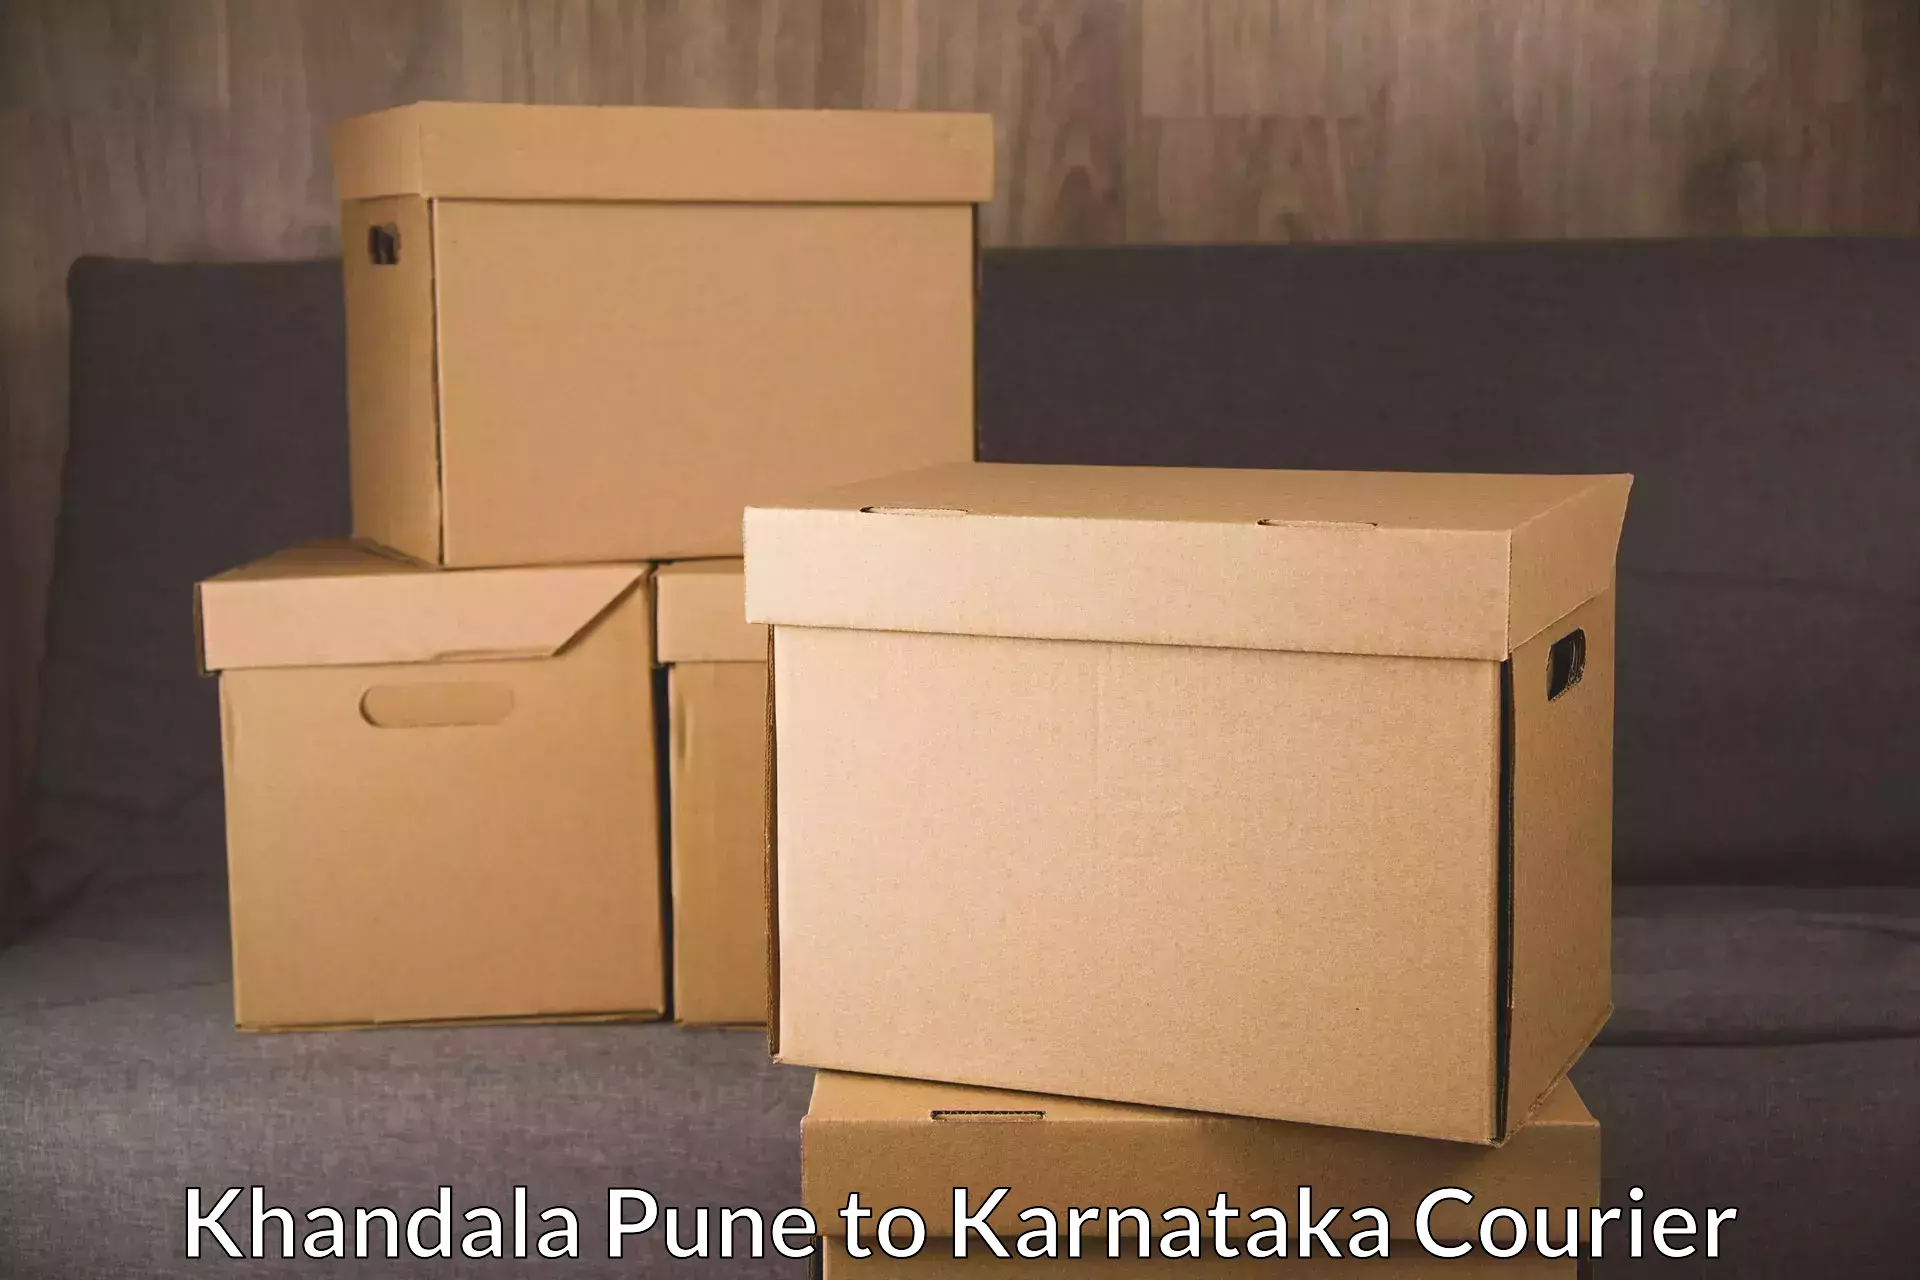 Flexible delivery schedules Khandala Pune to Yadgiri